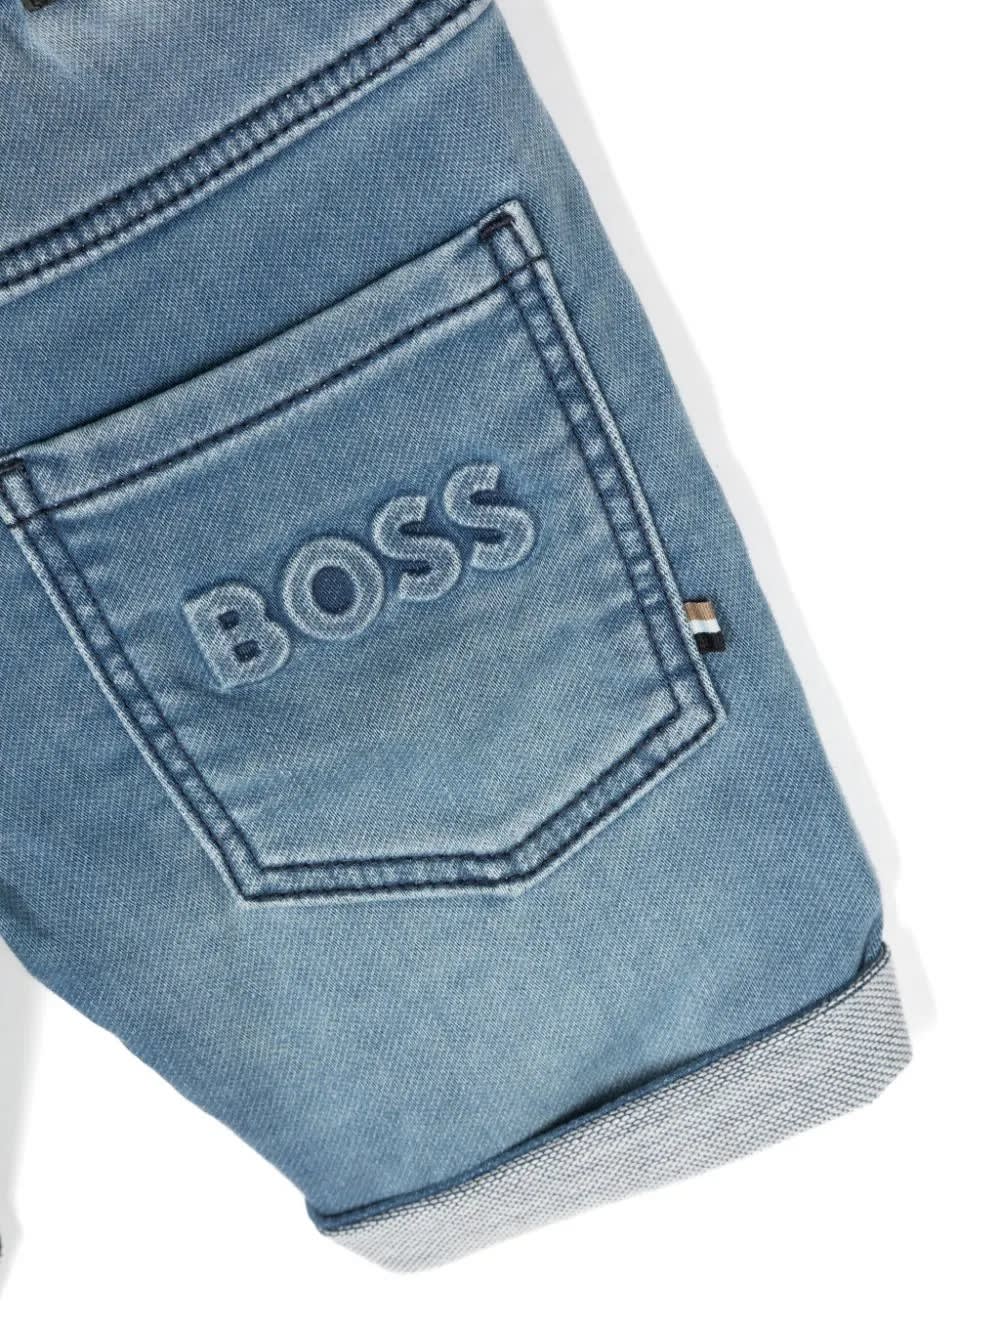 Shop Hugo Boss Shorts Denim In Blue